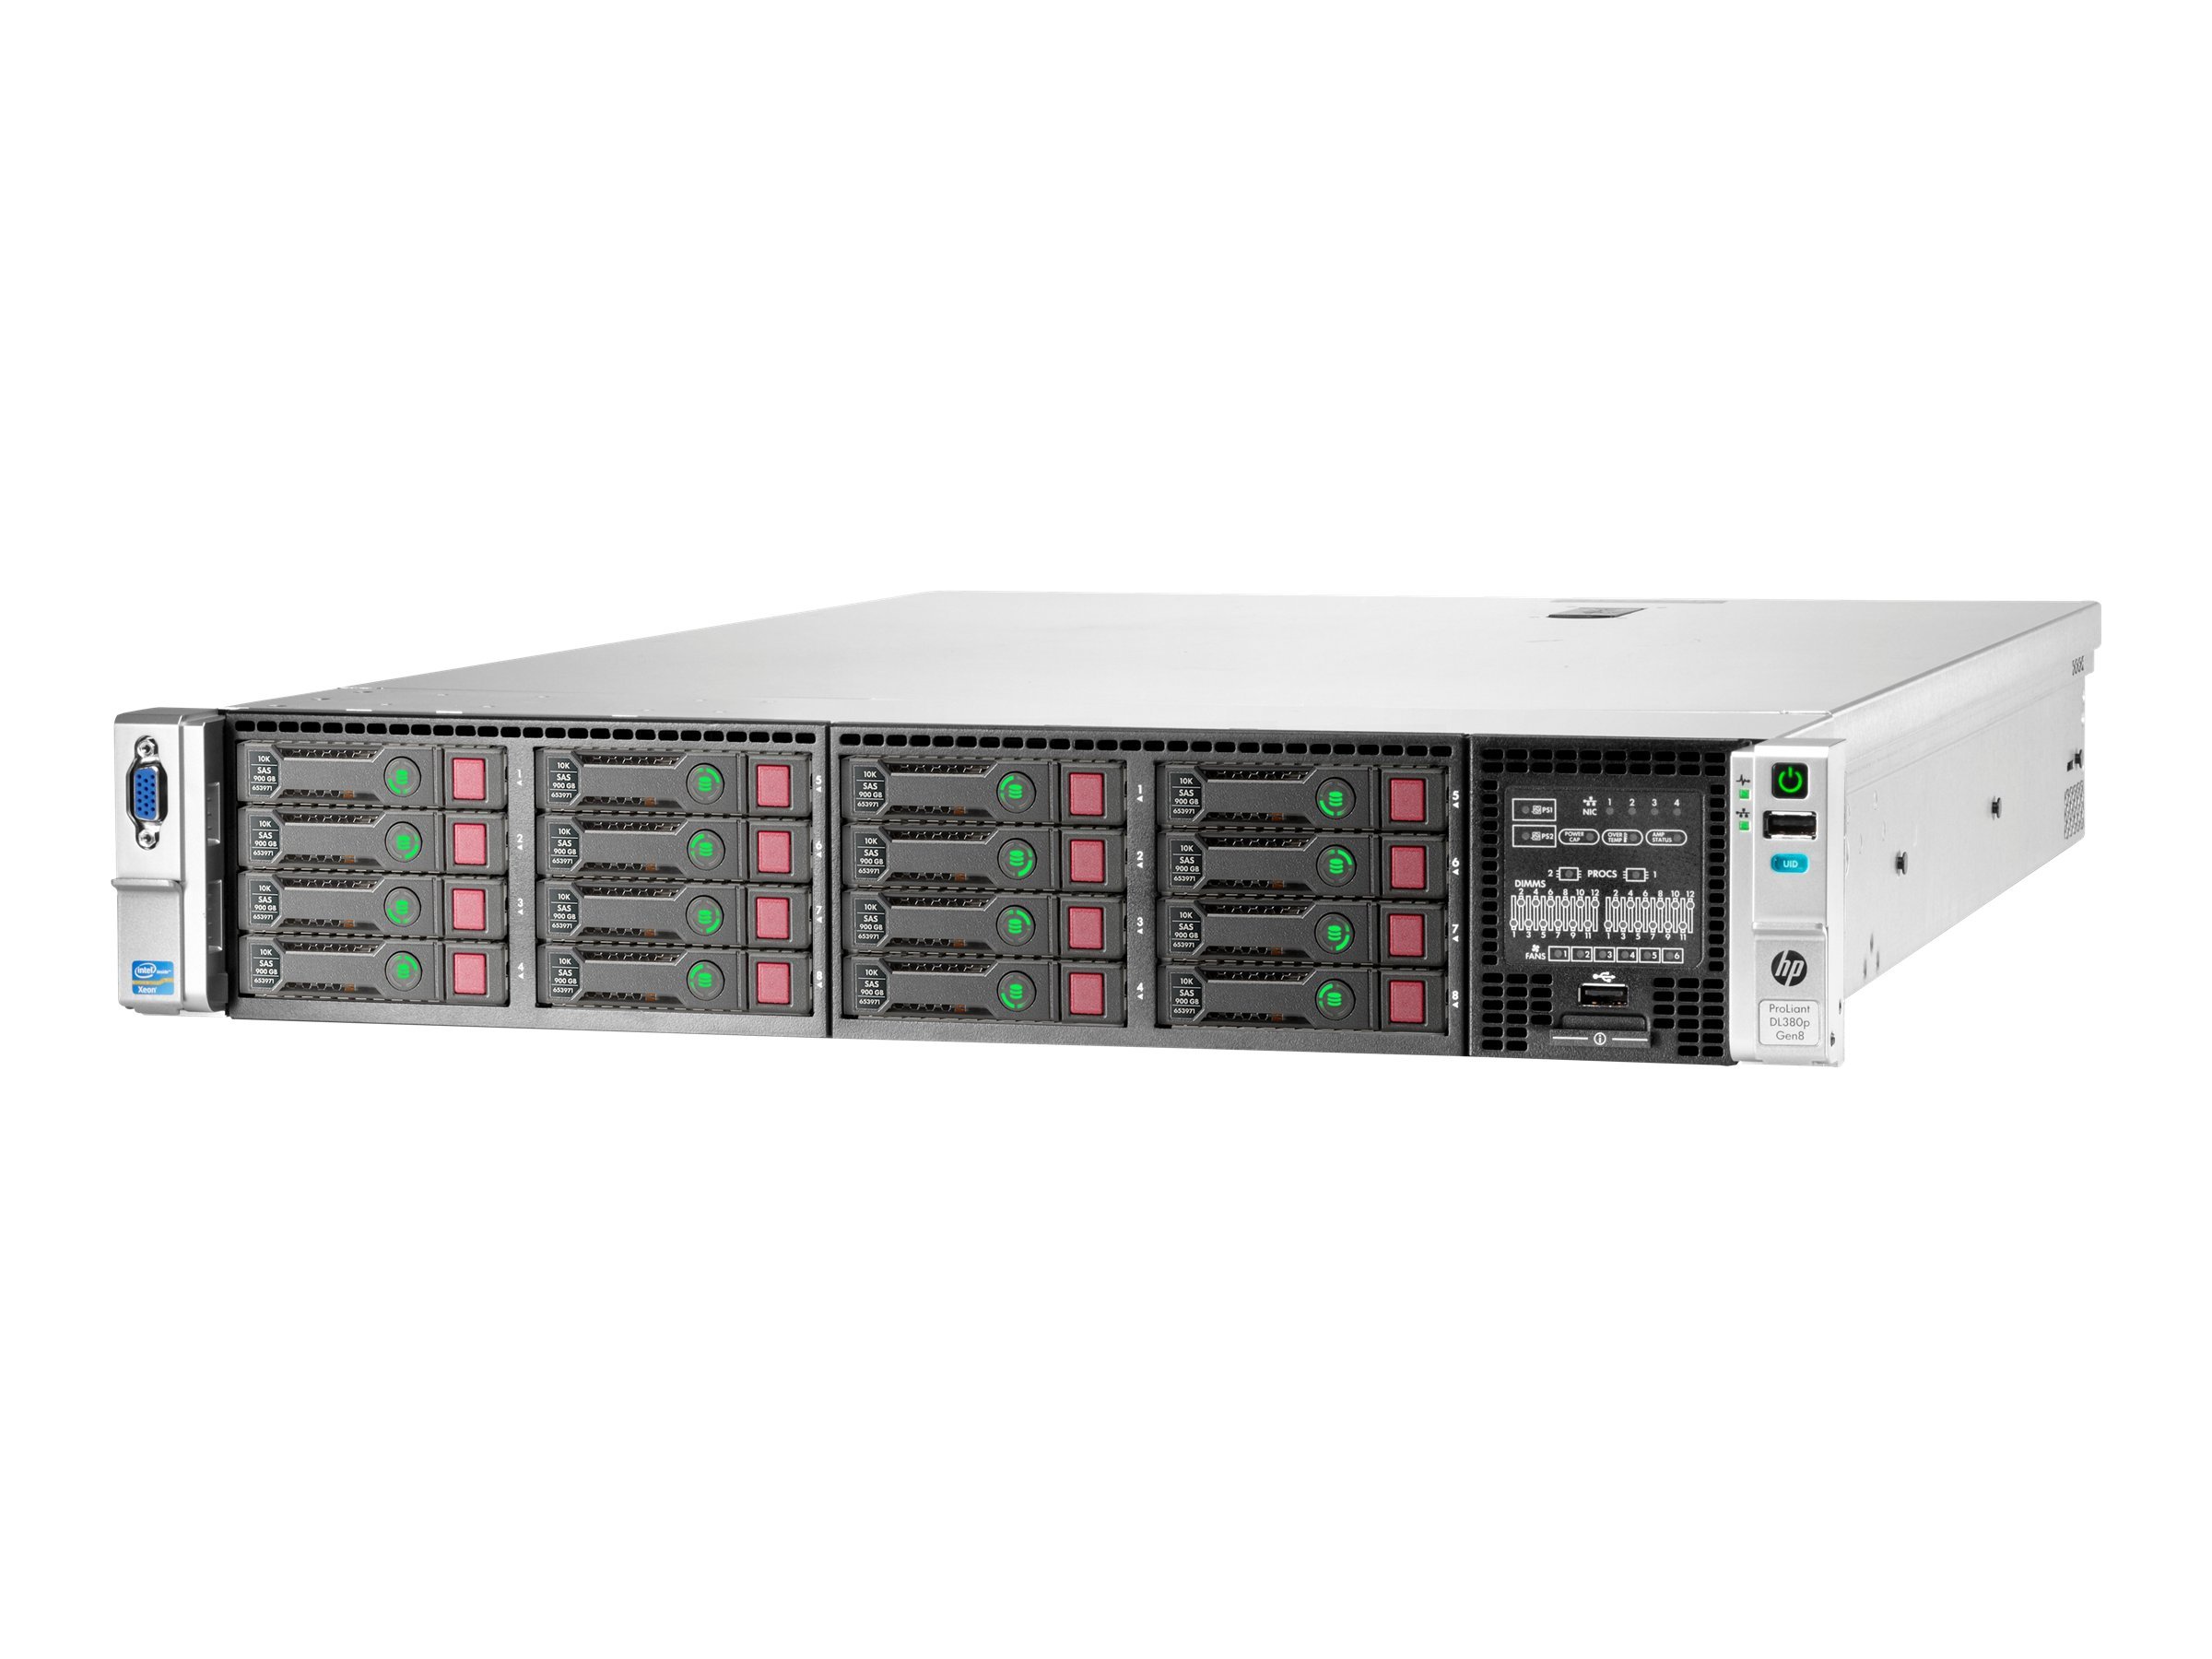 HPE ProLiant DL380p Gen8 High Performance - Server - Rack-Montage - 2U - zweiweg - 2 x Xeon E5-2650 / 2 GHz